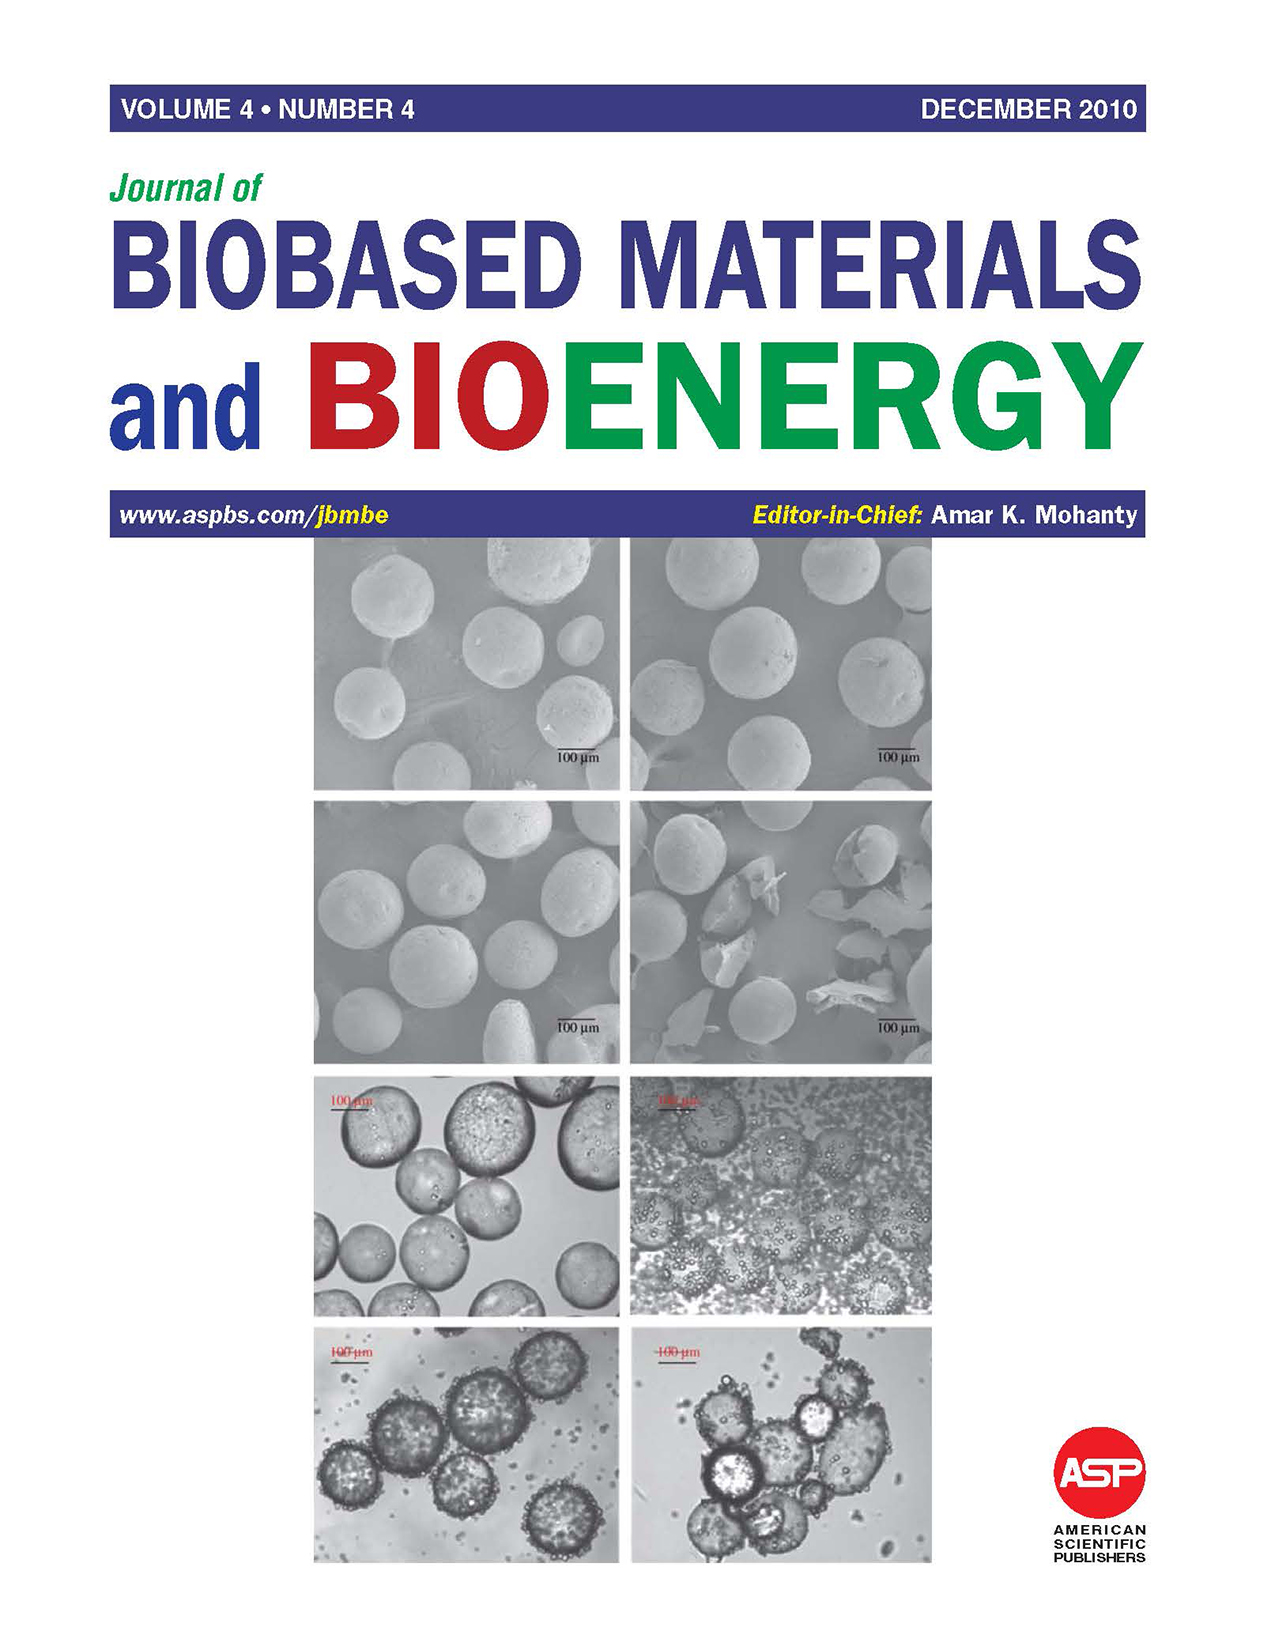 Biobased Materials and Bioenergy December 2010 cover.